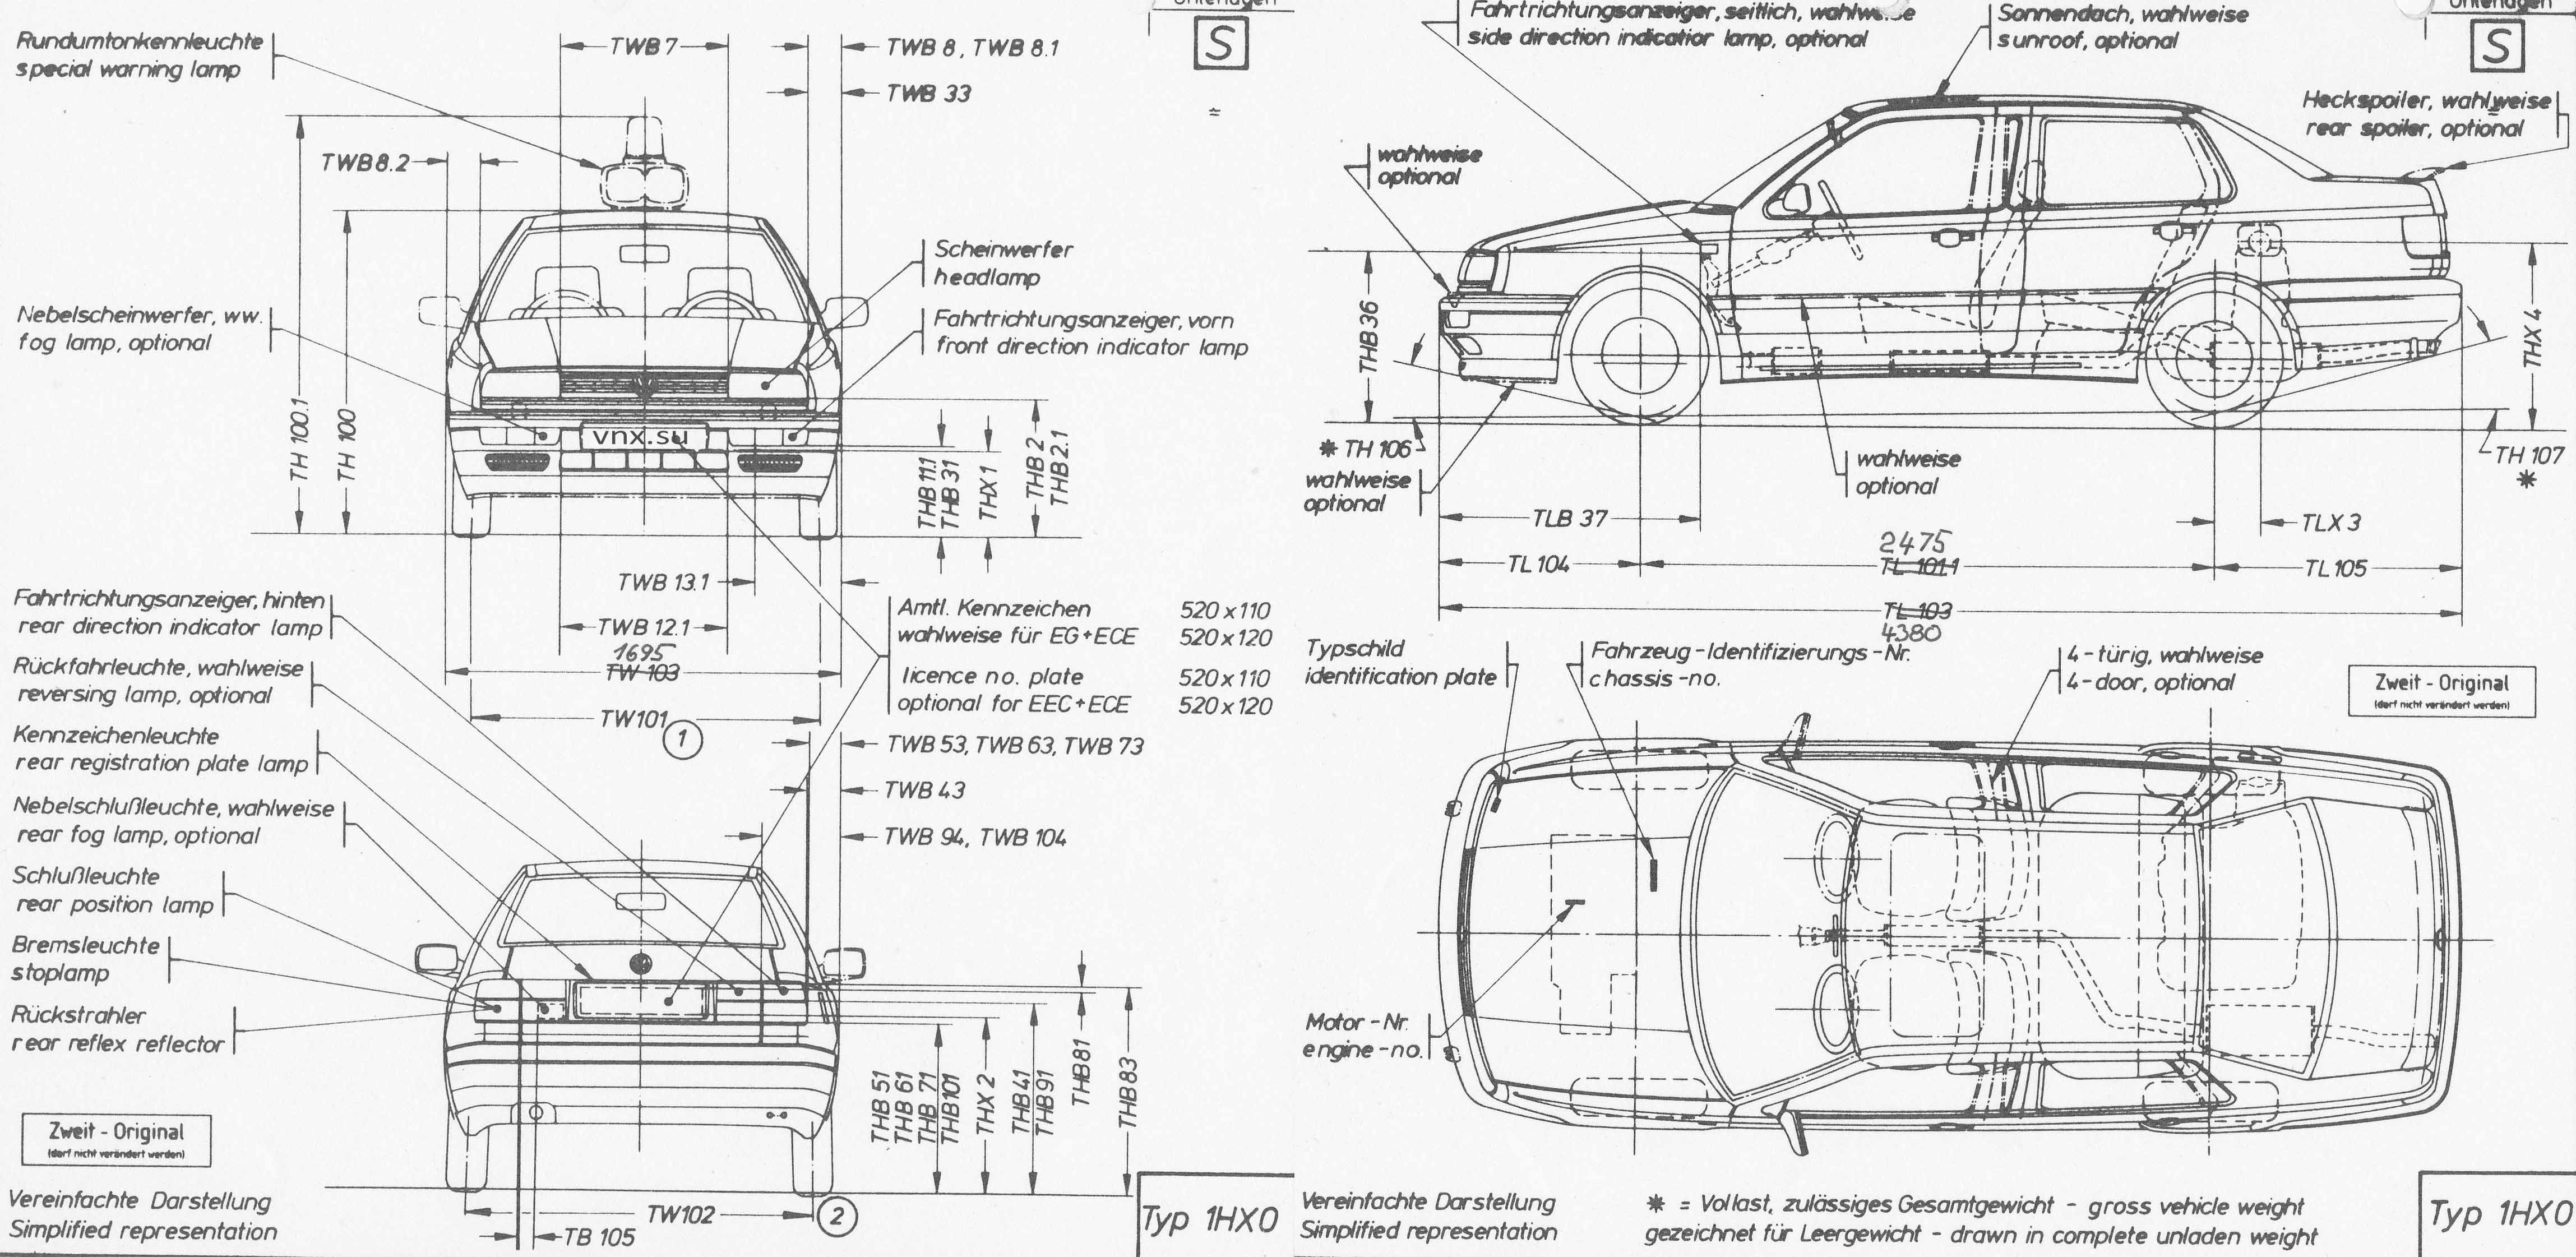 Габаритные размеры Фольксваген Венто (dimensions VW Vento 1991-1997)